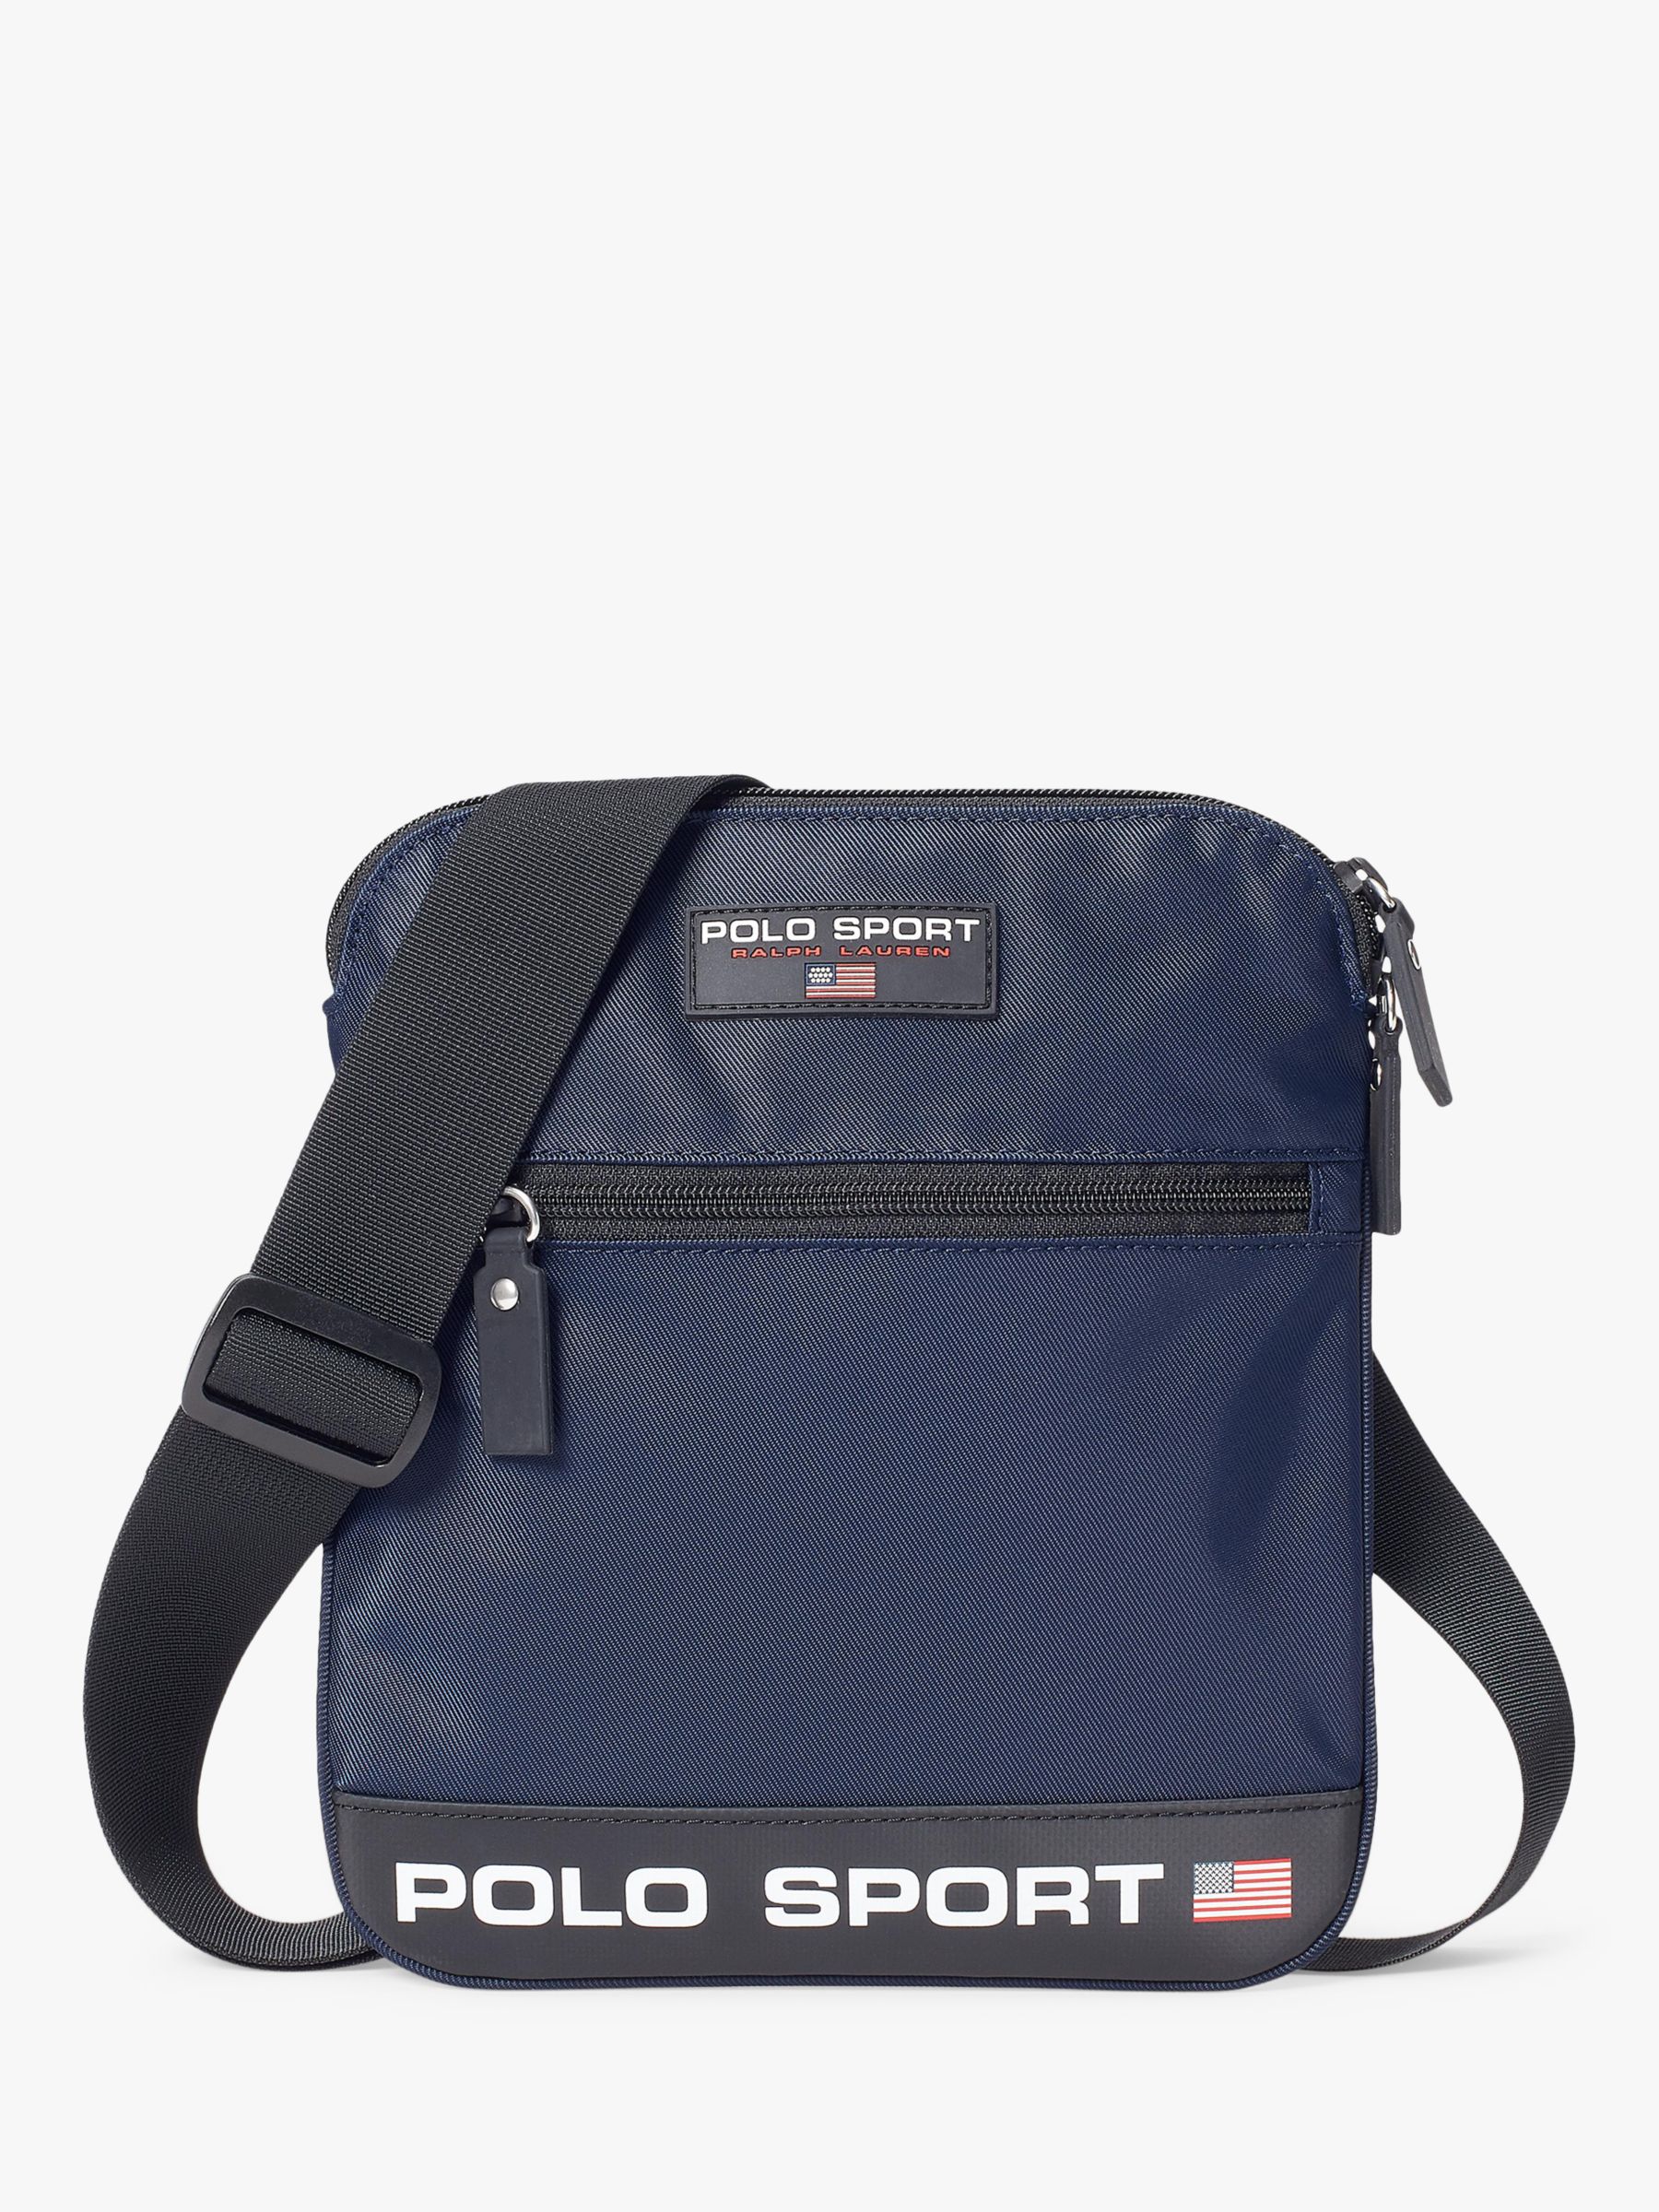 polo sport satchel